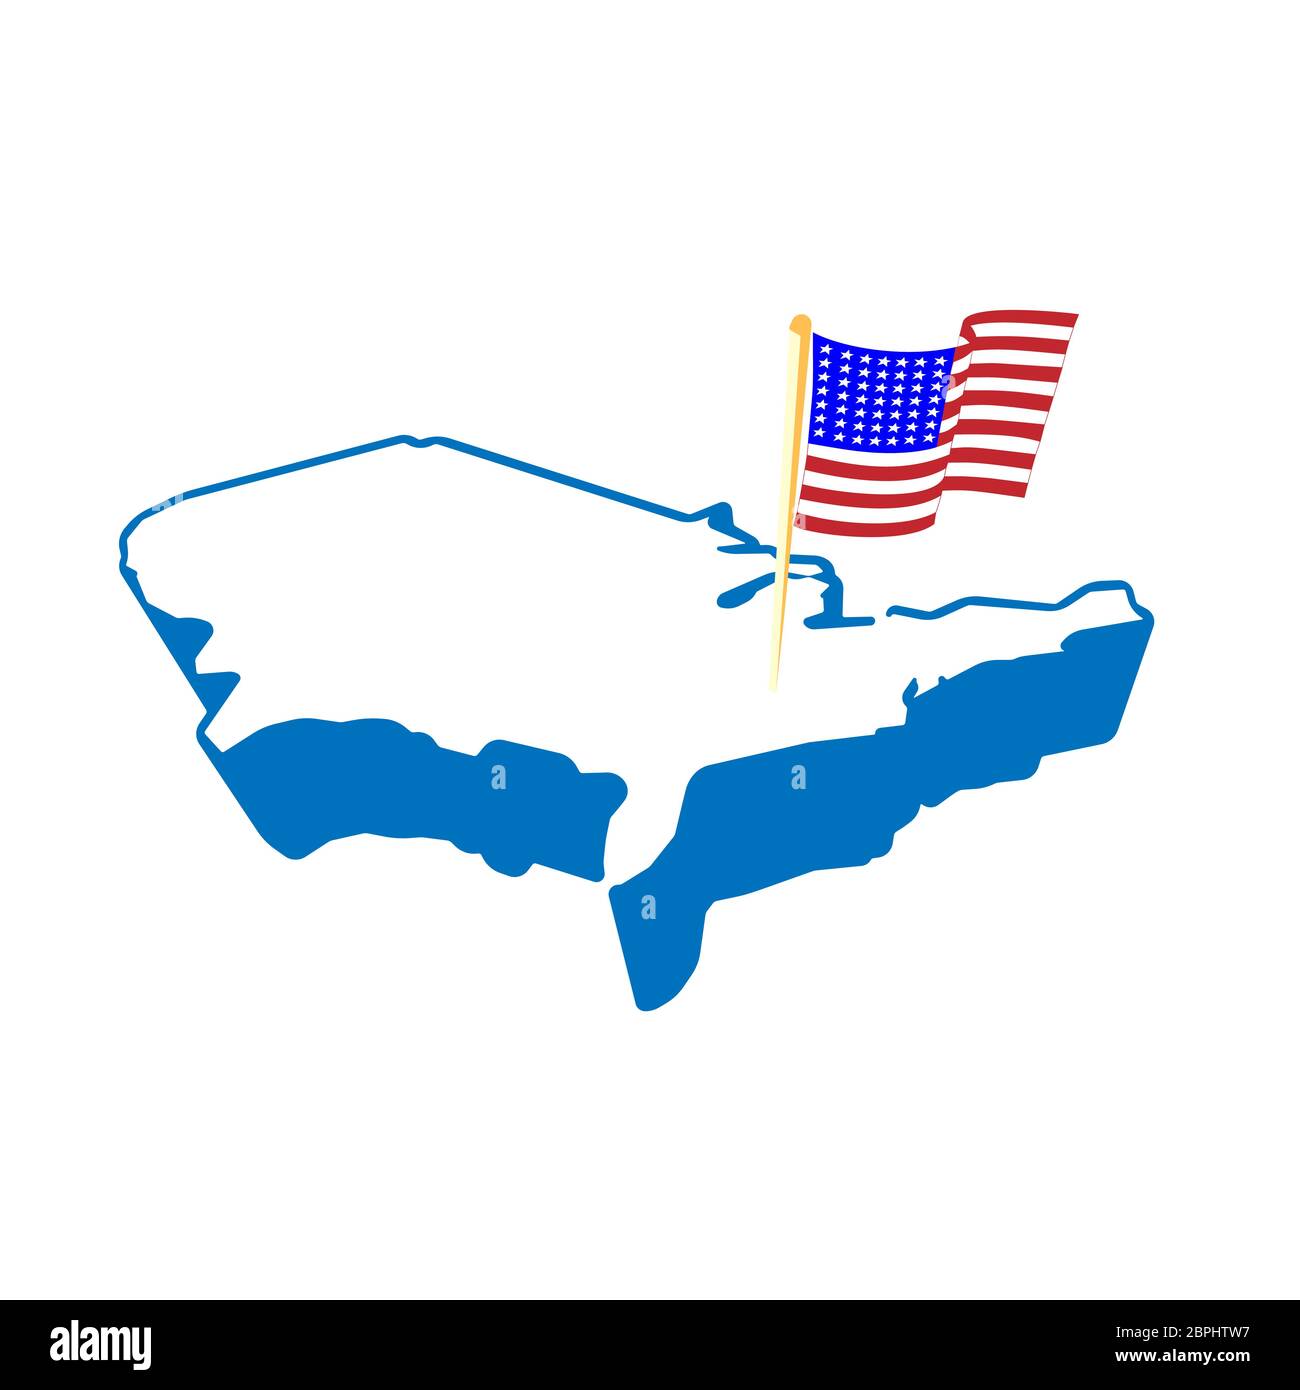 Creative Abstract USA Karte und Flagge, Vektor-Illustration Stock Vektor